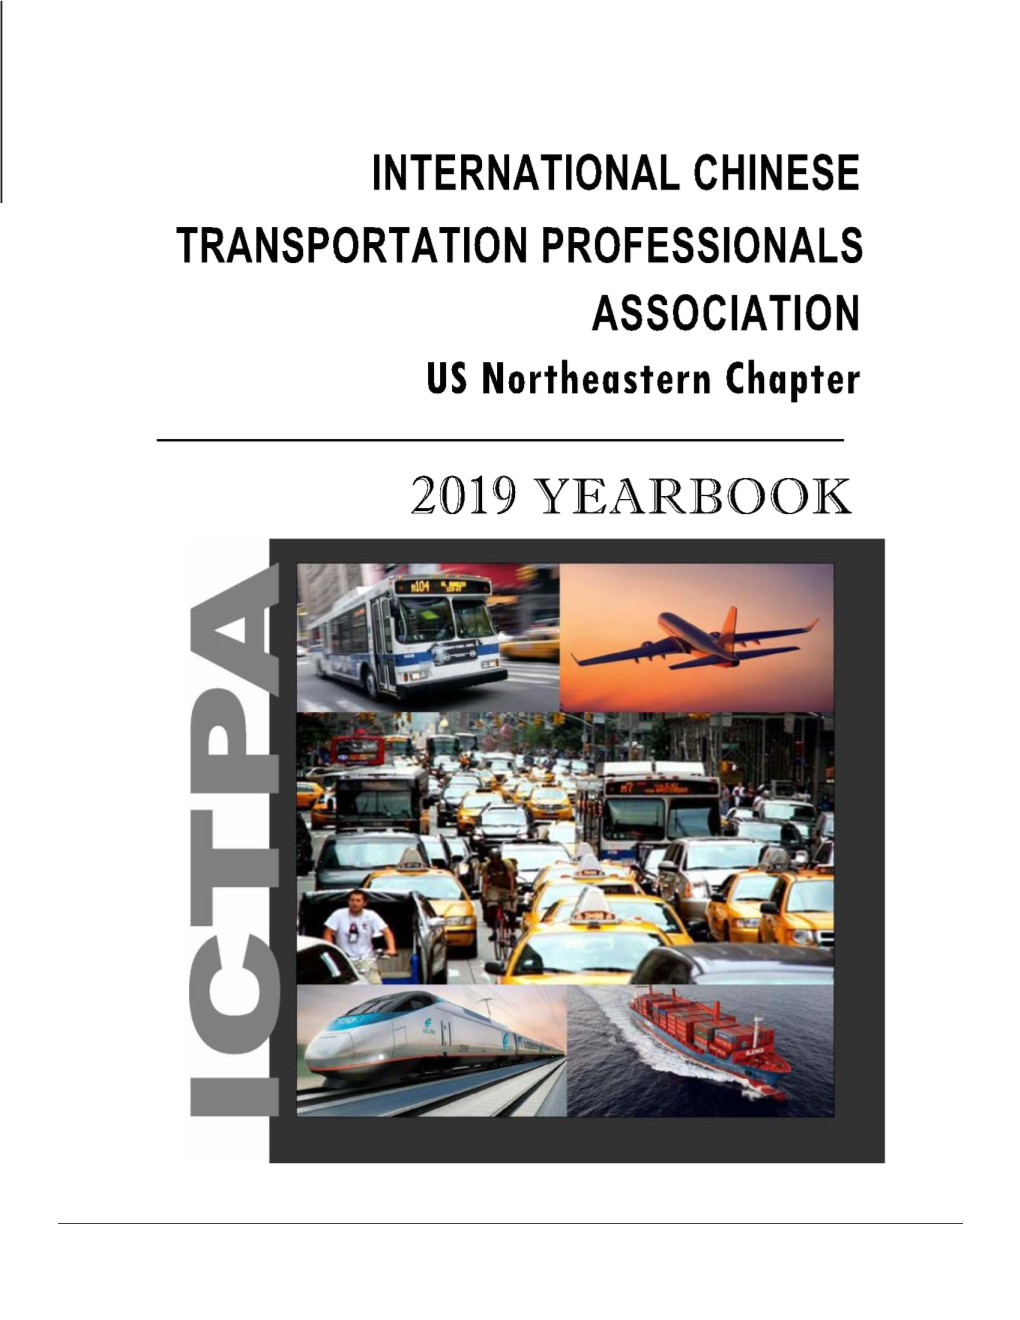 ICTPA USNE 2019 Yearbook